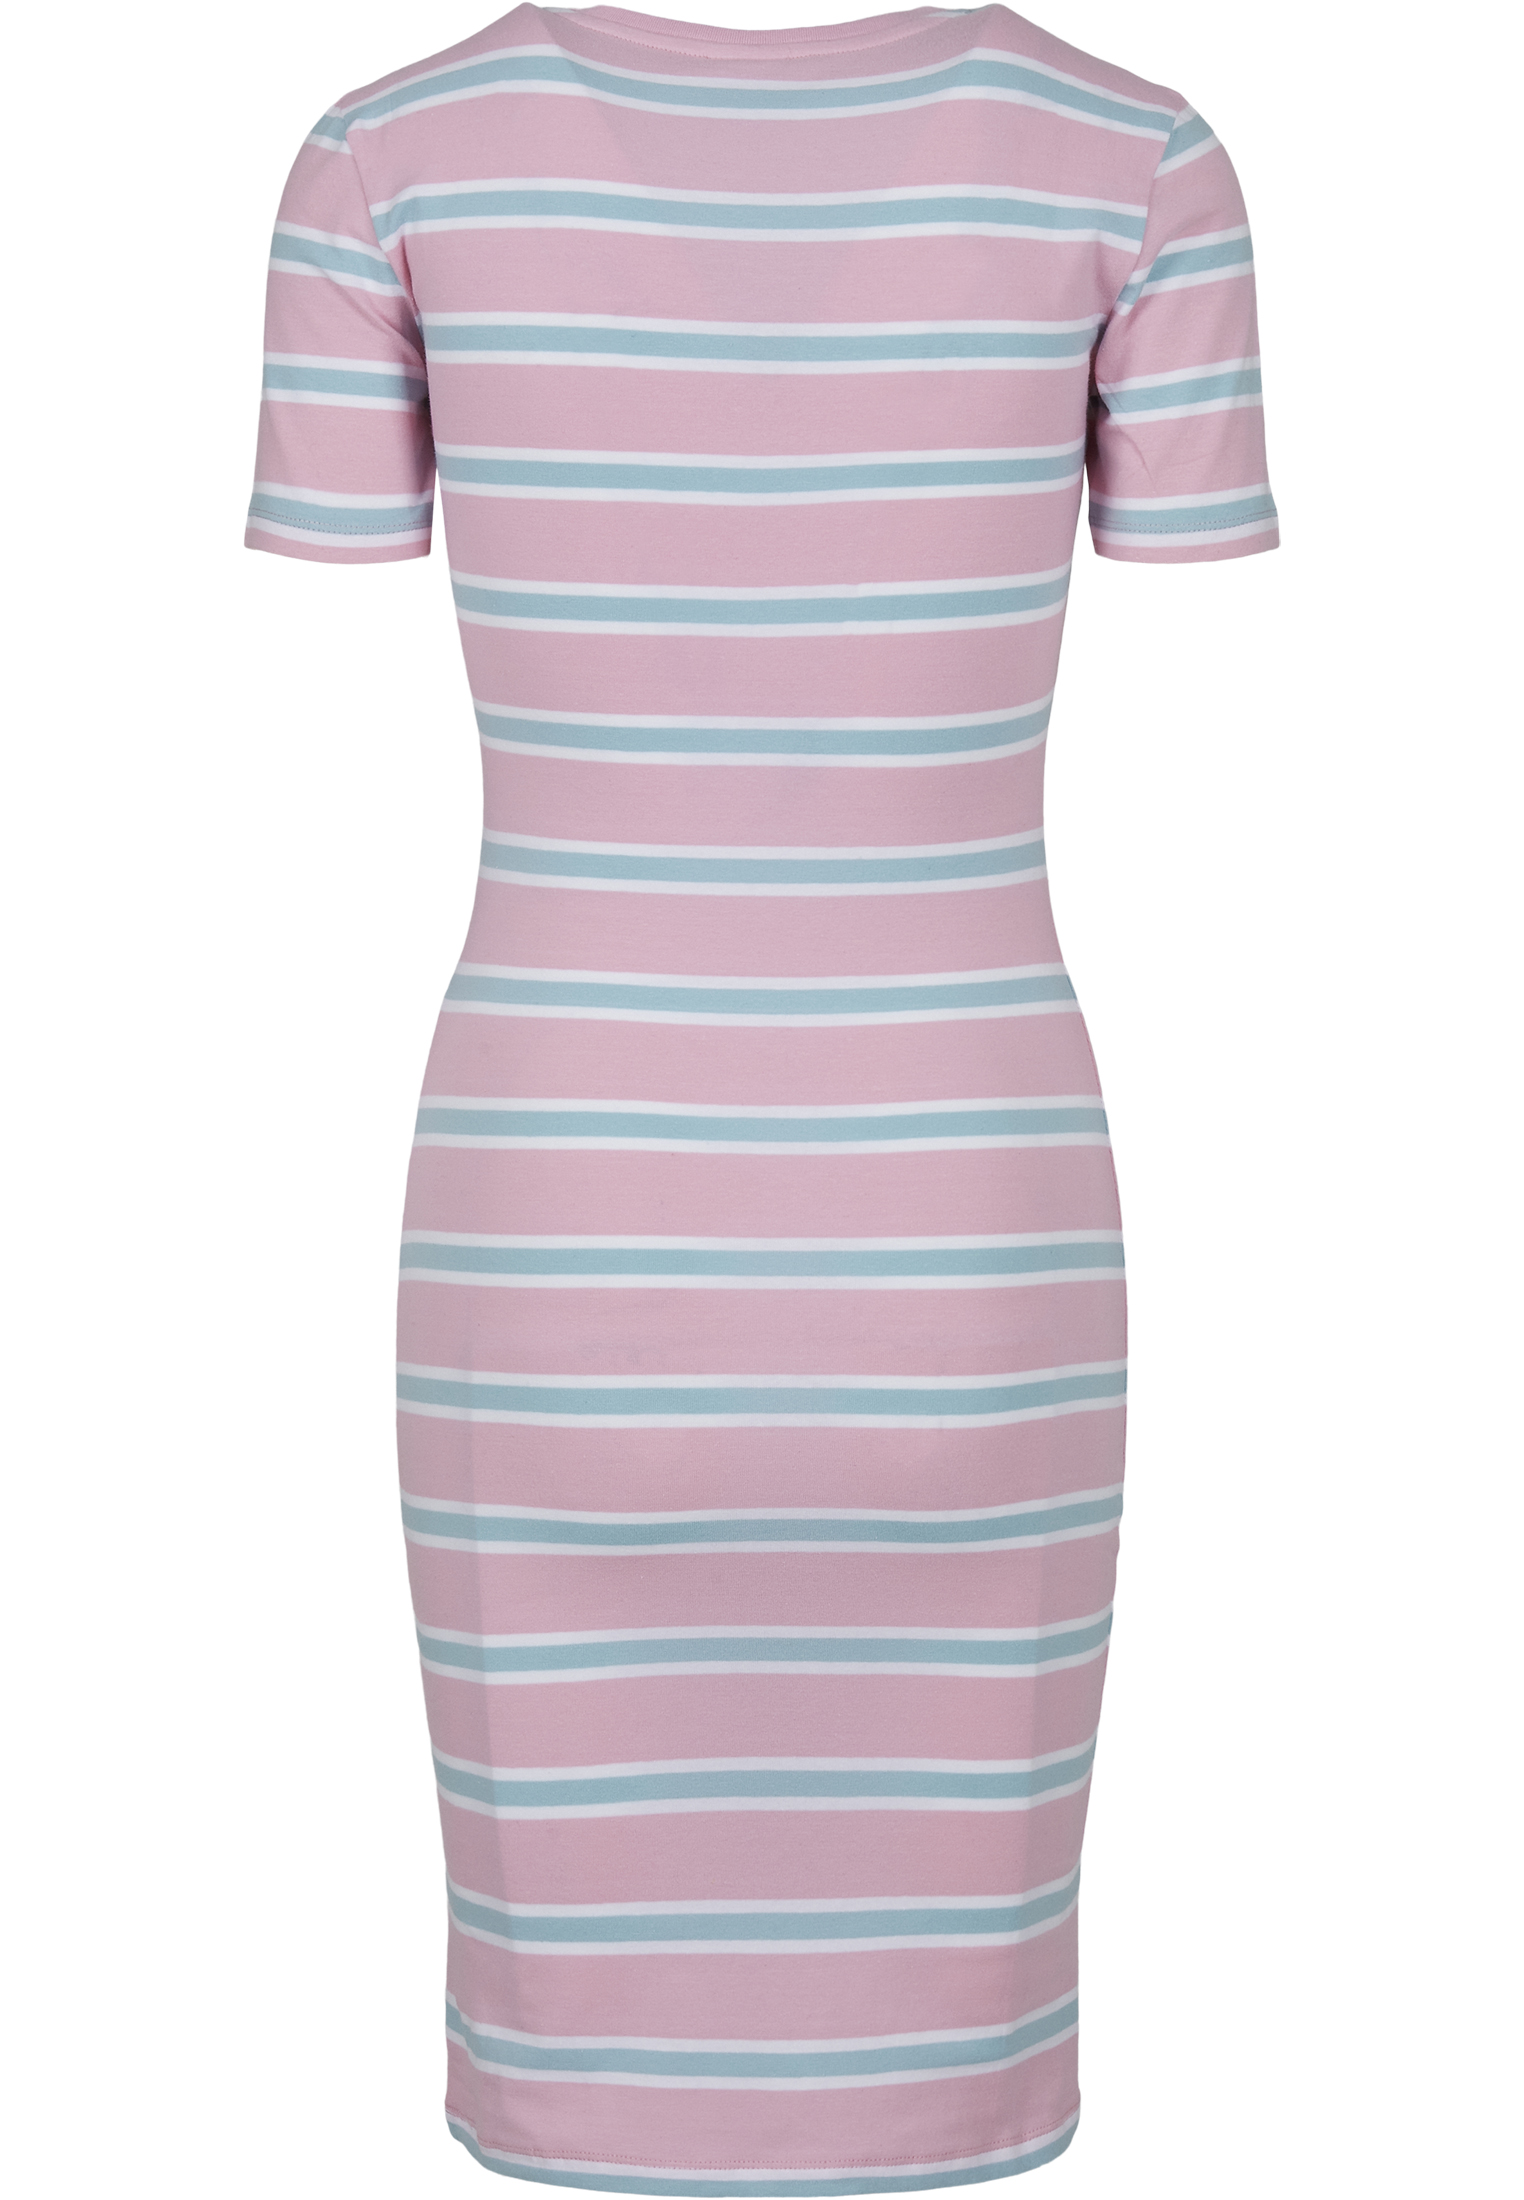 Kleider & R?cke Ladies Stretch Stripe Dress in Farbe girlypink/oceanblue